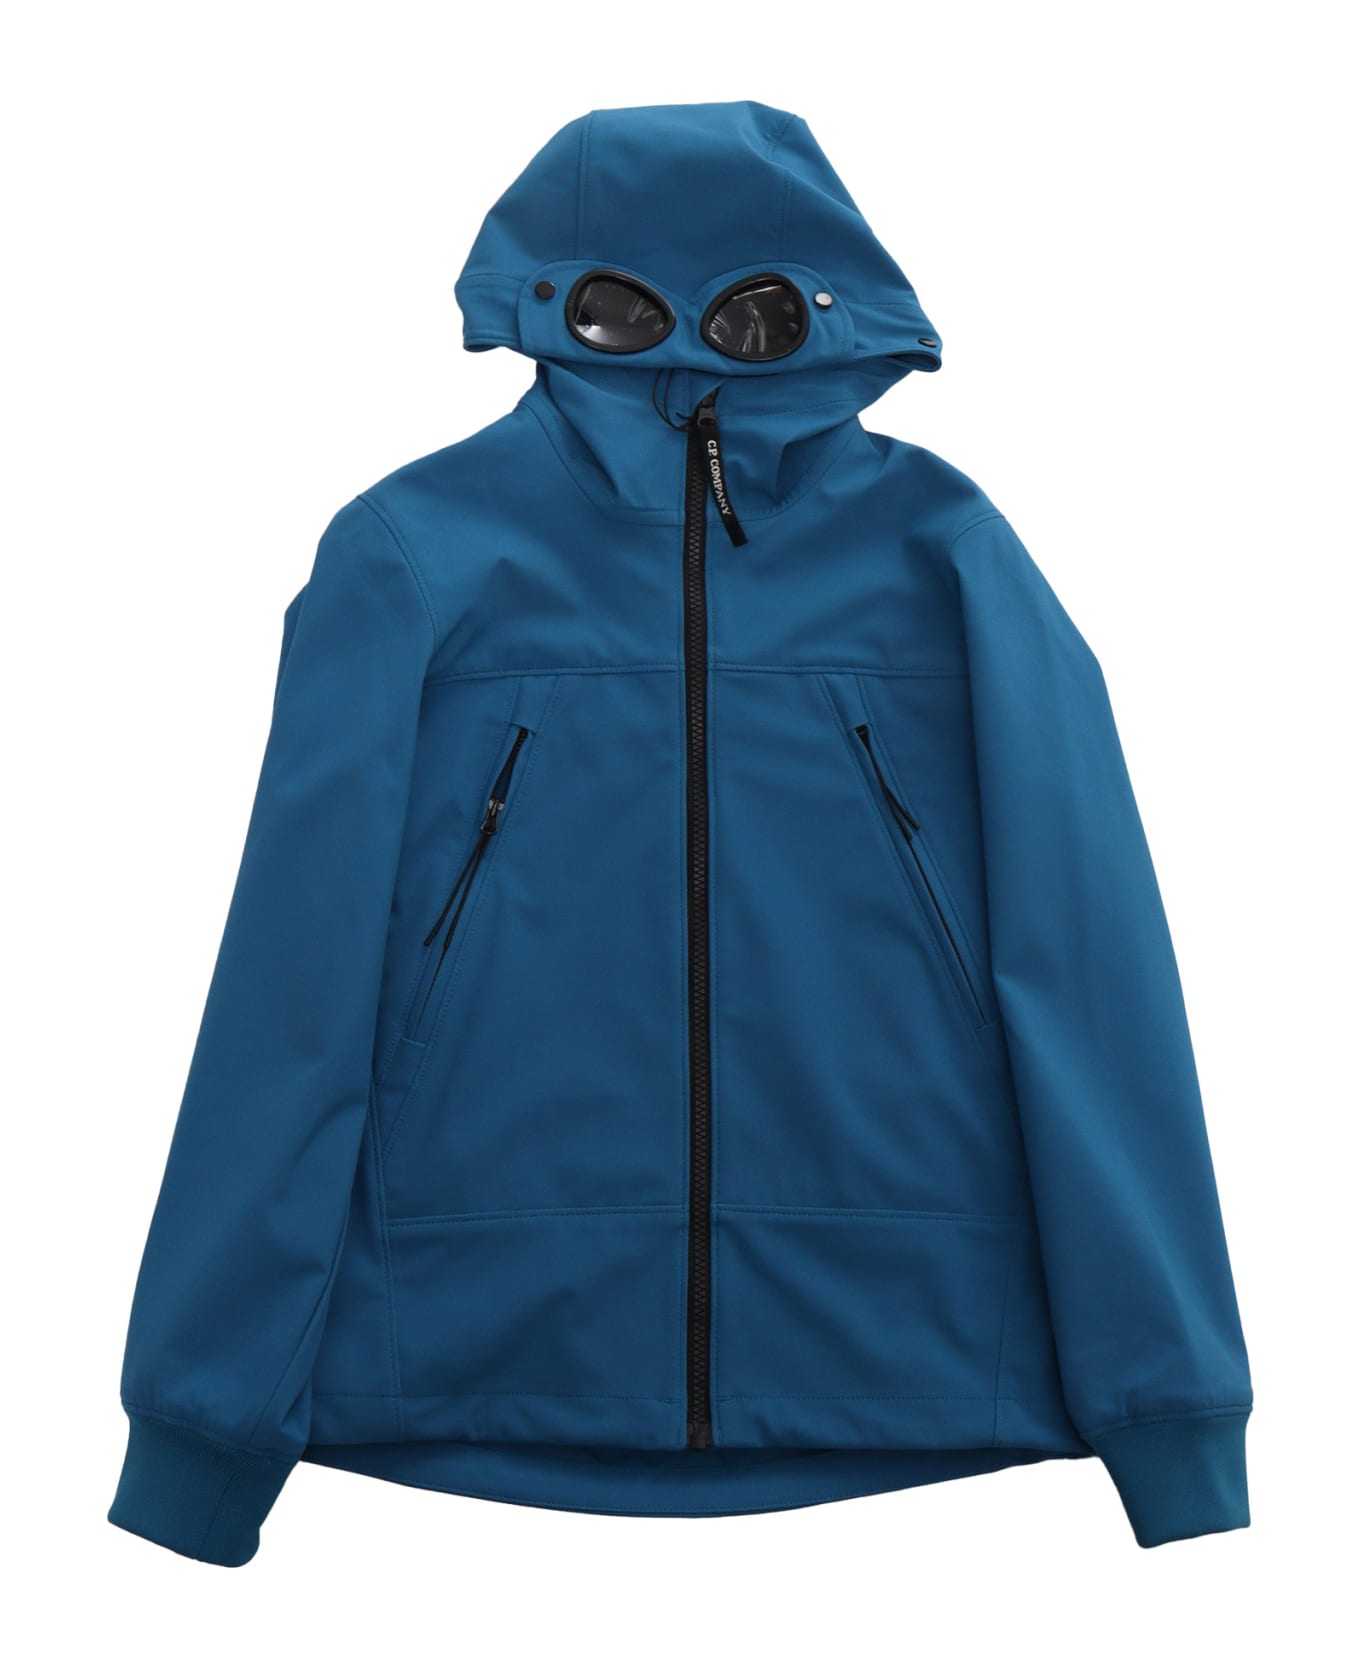 C.P. Company Undersixteen Blue Hooded Jacket - BLUE